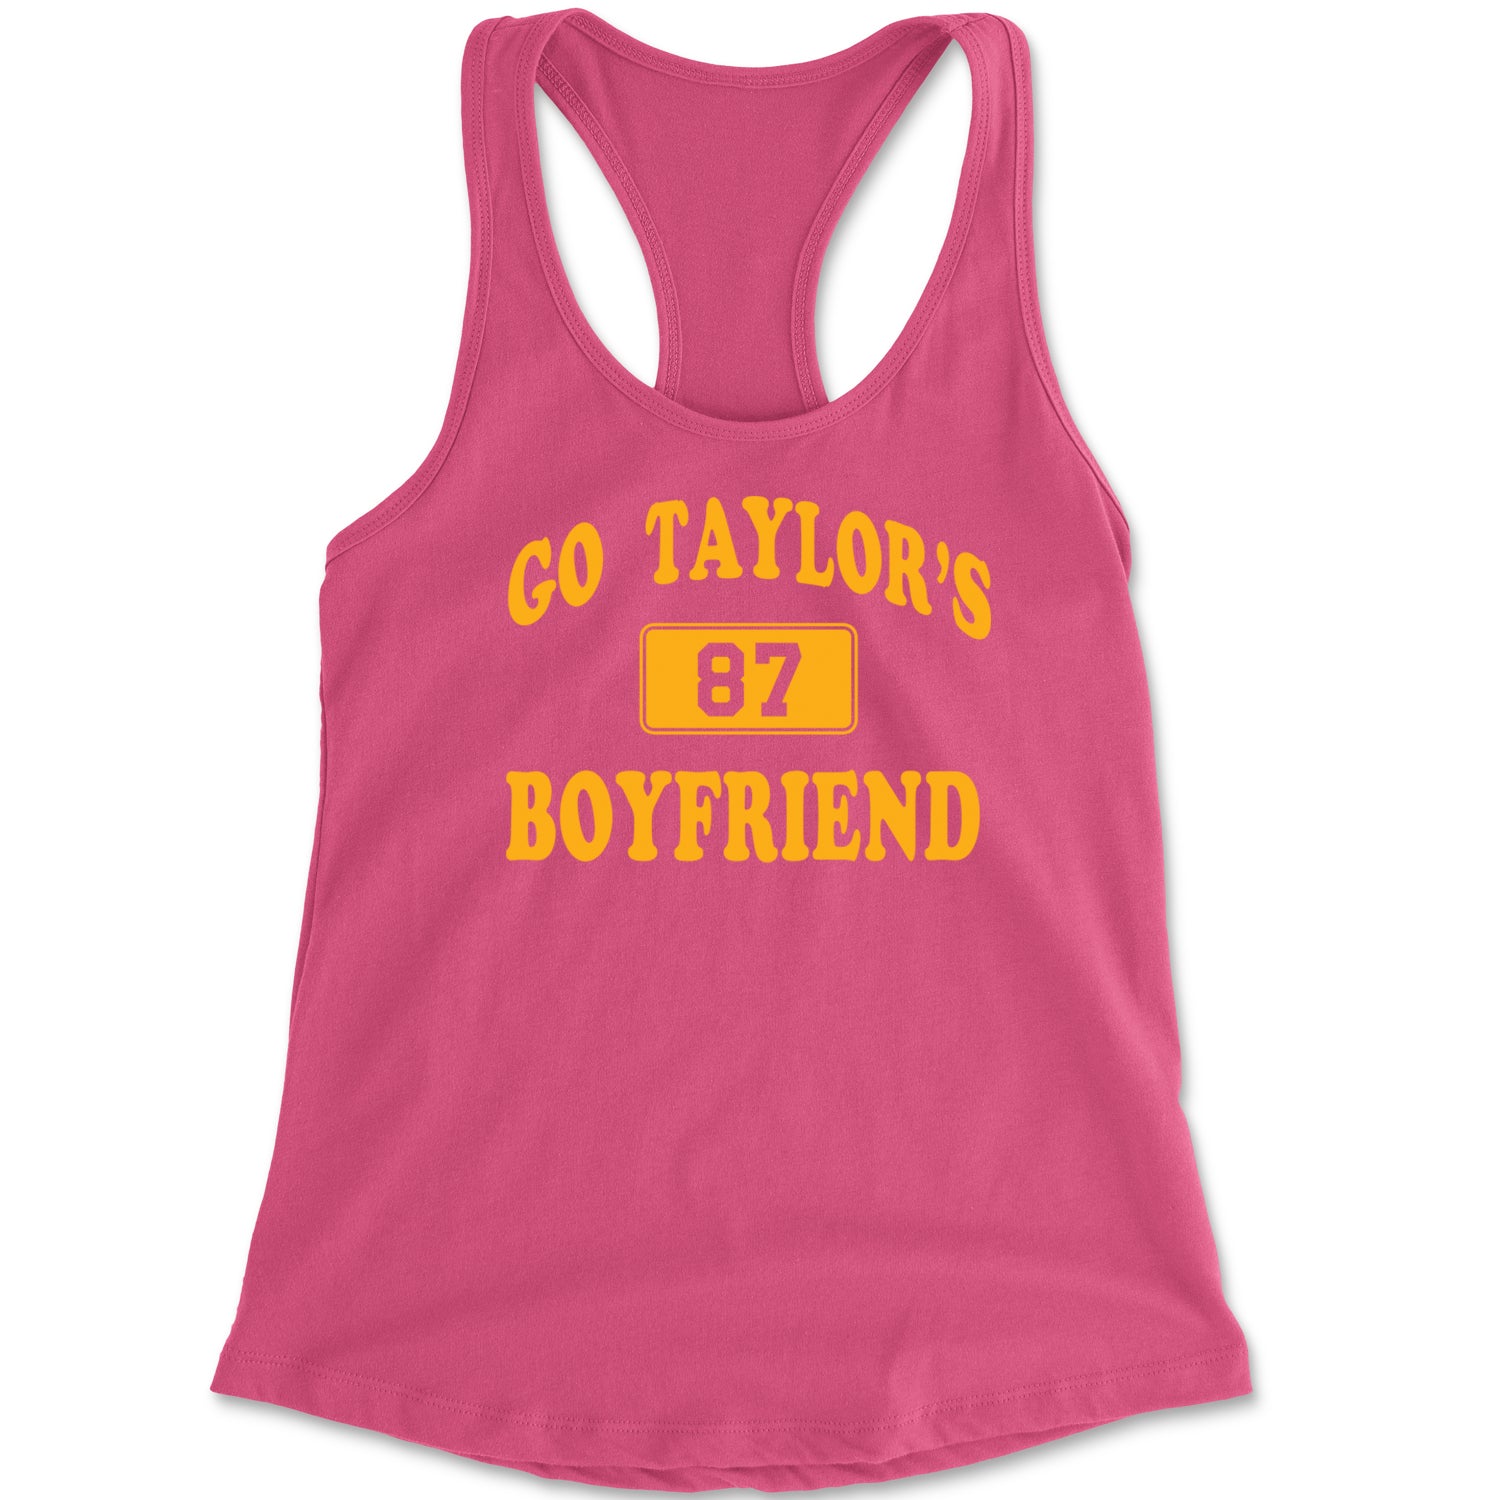 Go Taylor's Boyfriend Kansas City Racerback Tank Top for Women